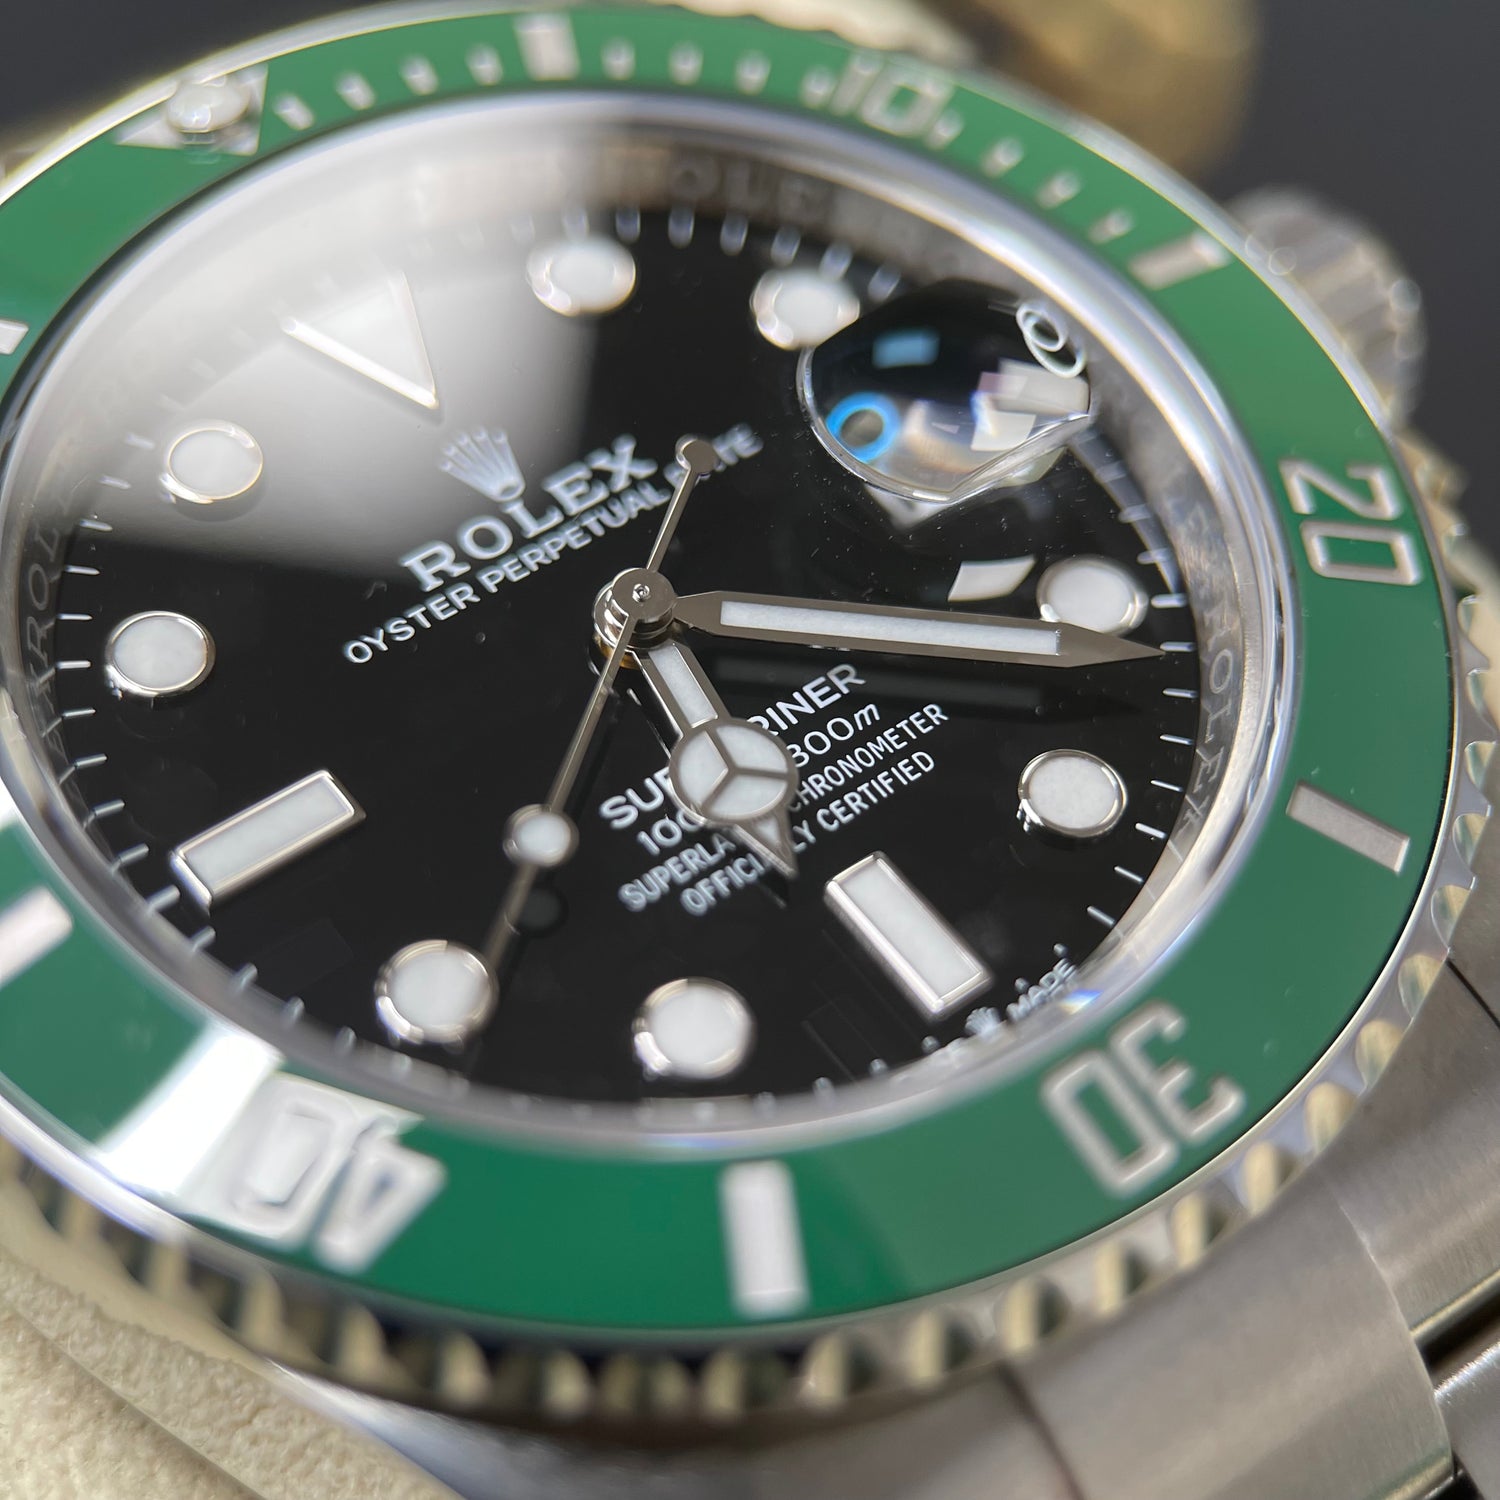 Rolex Submariner Date 41mm 'Starbucks' 126610LV Mint Condition 2020 Full Set Watch